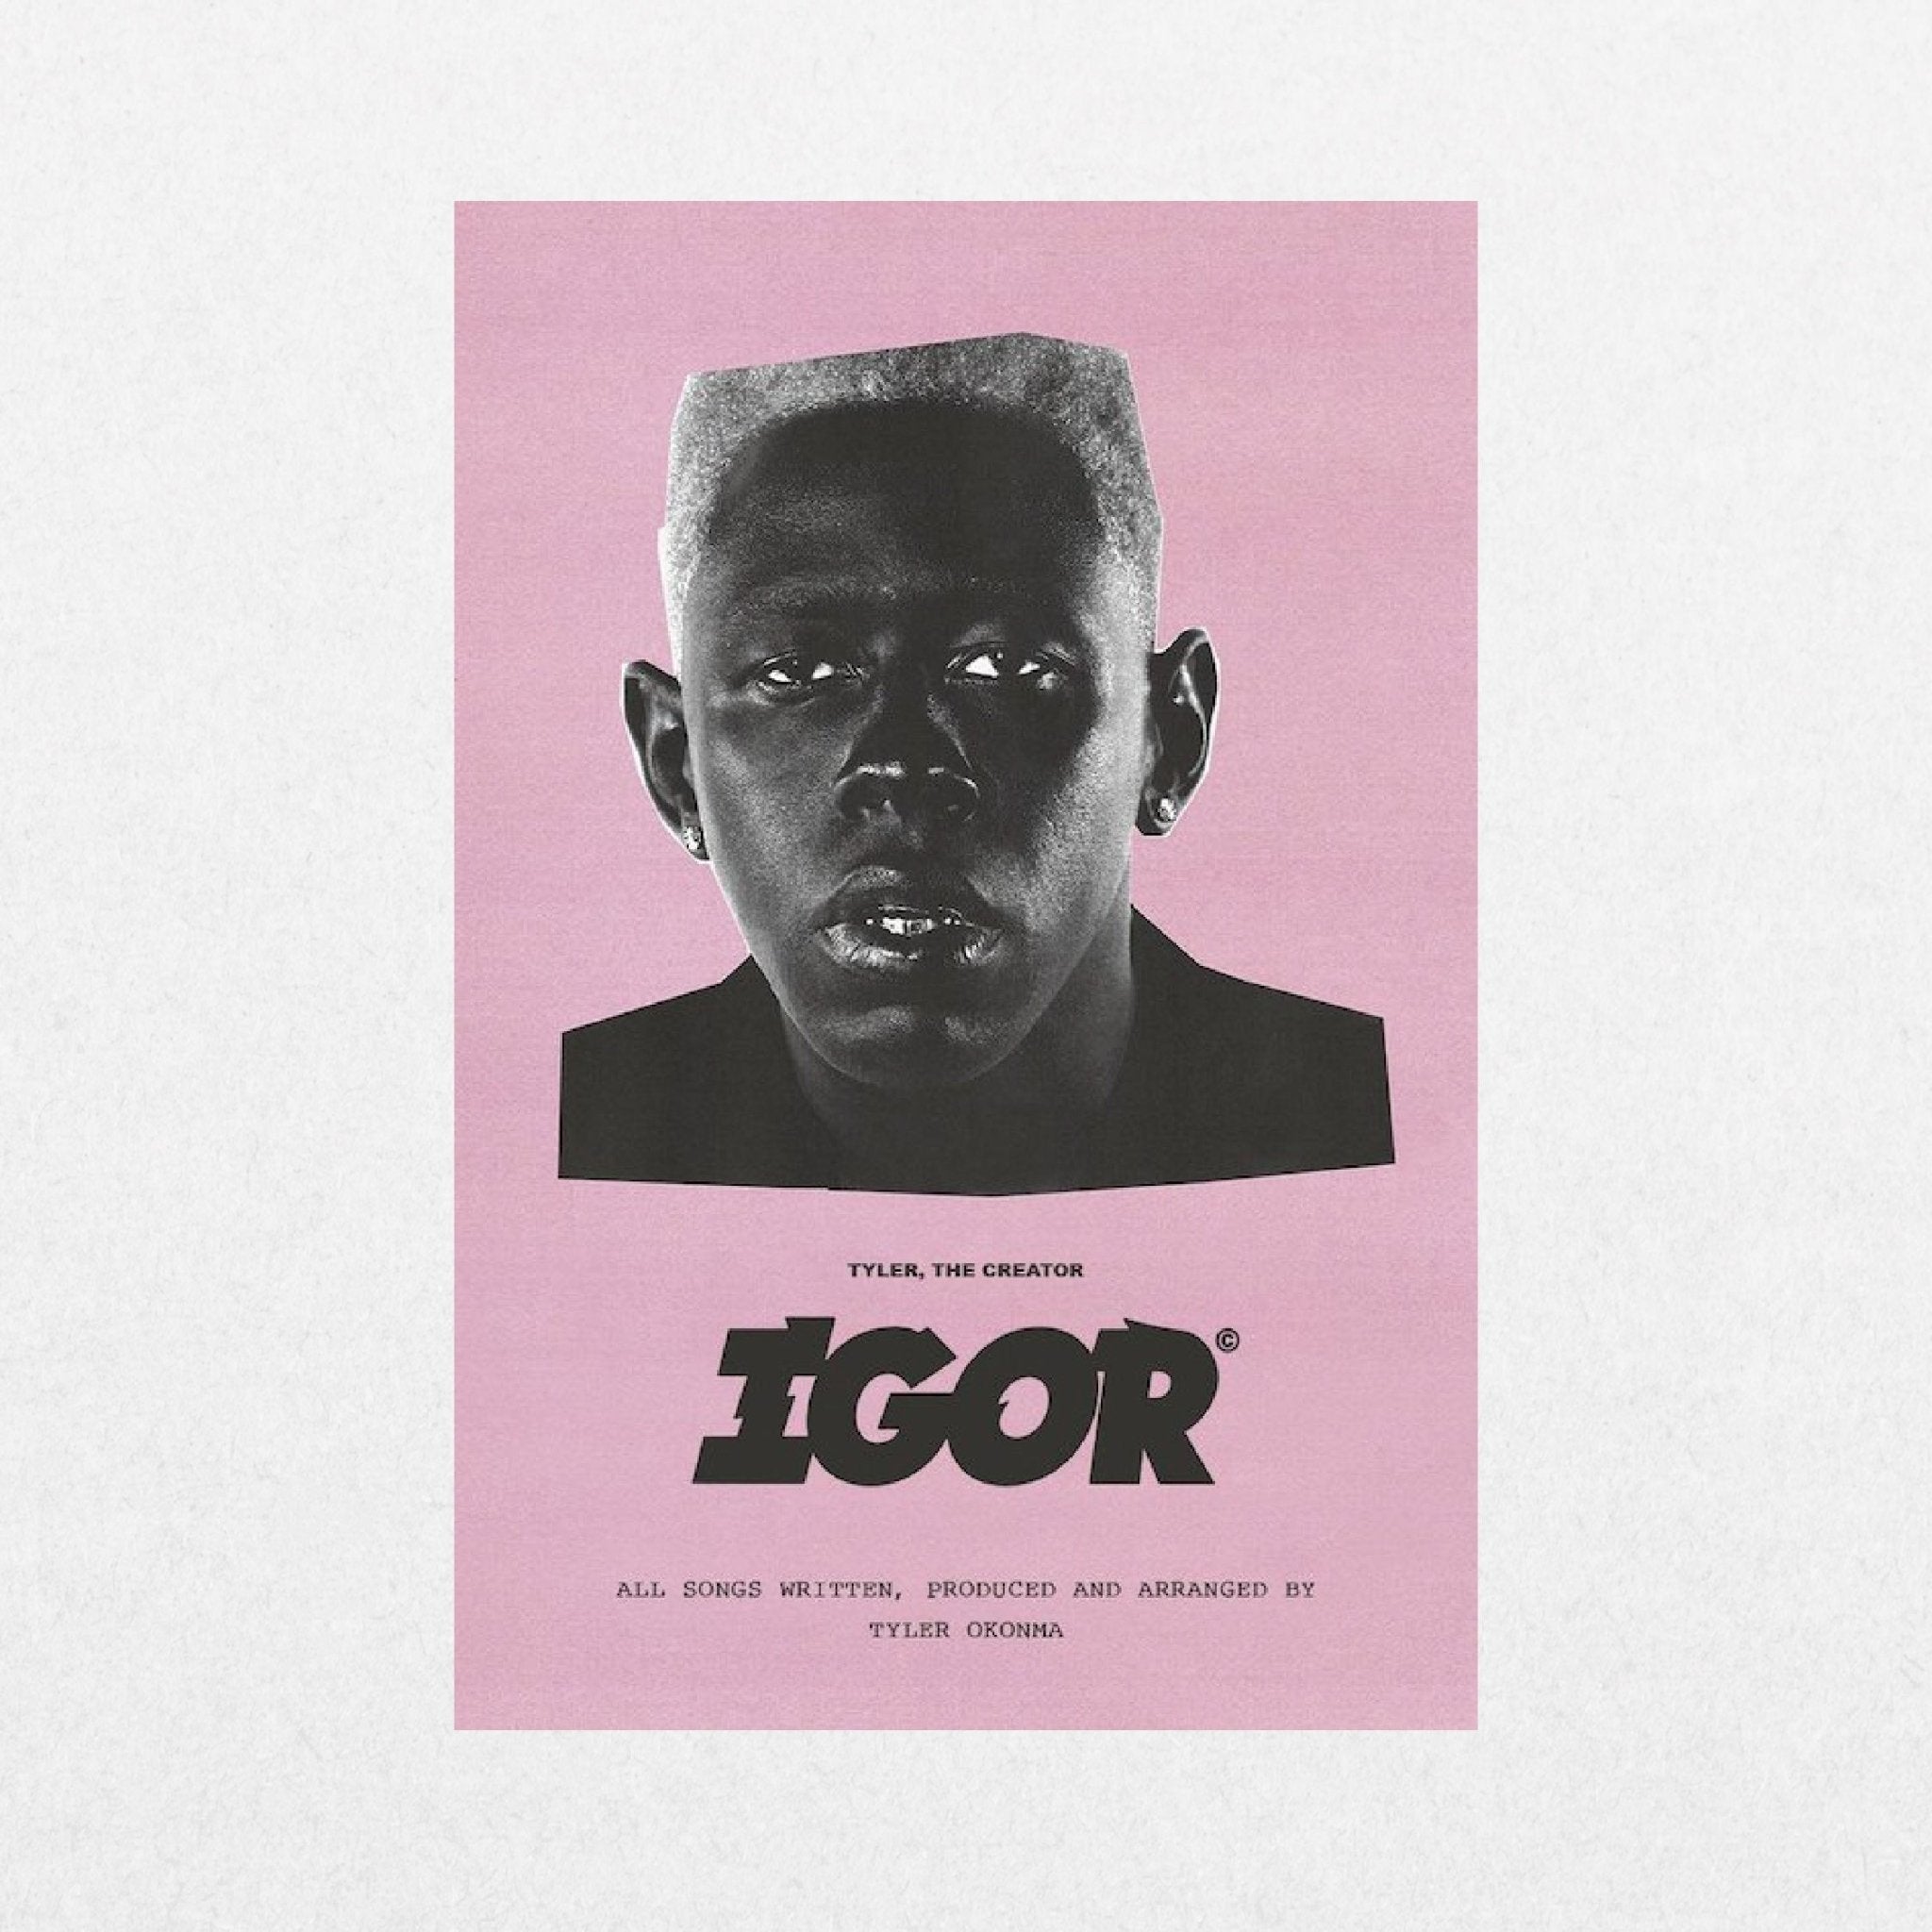 Tyler The Creator - Igor Album Cover, 2019 - El Cartel